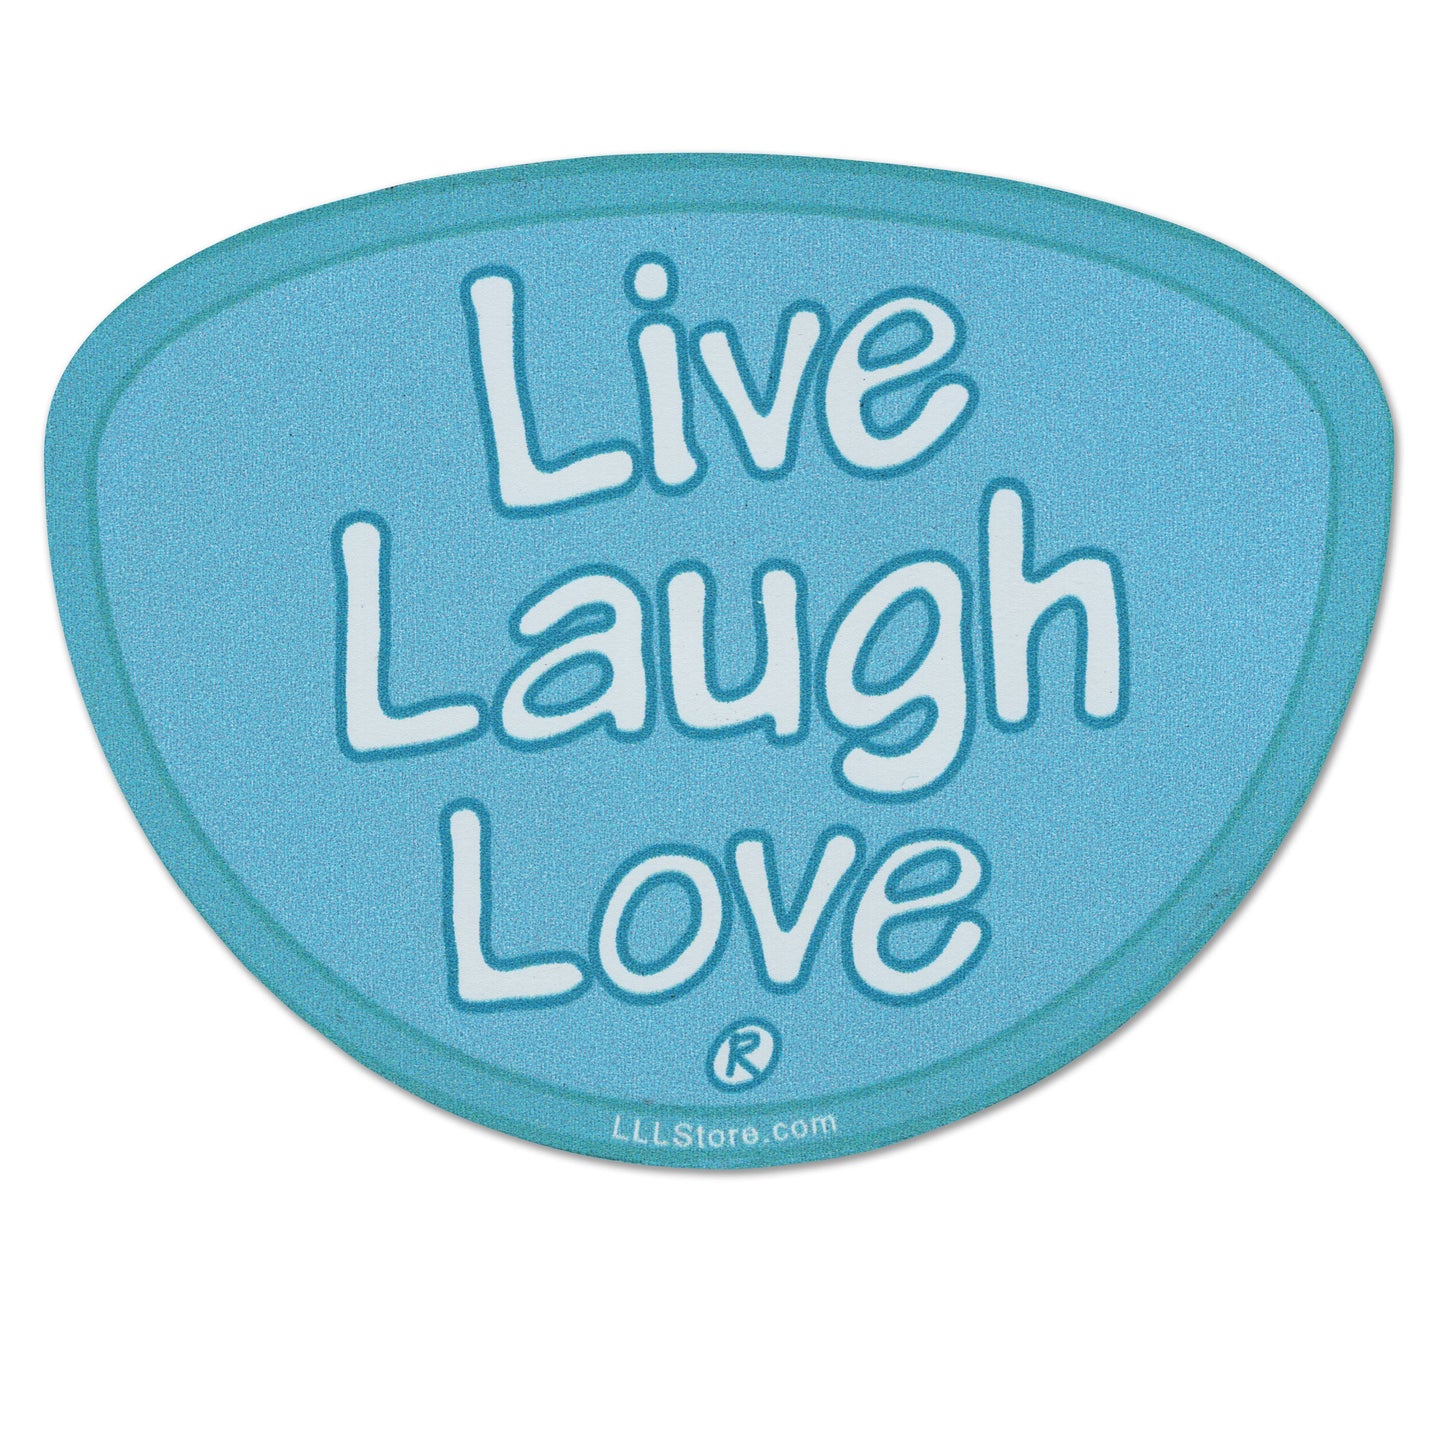 Live Laugh Love® Decorative Message Magnet - White on Blue